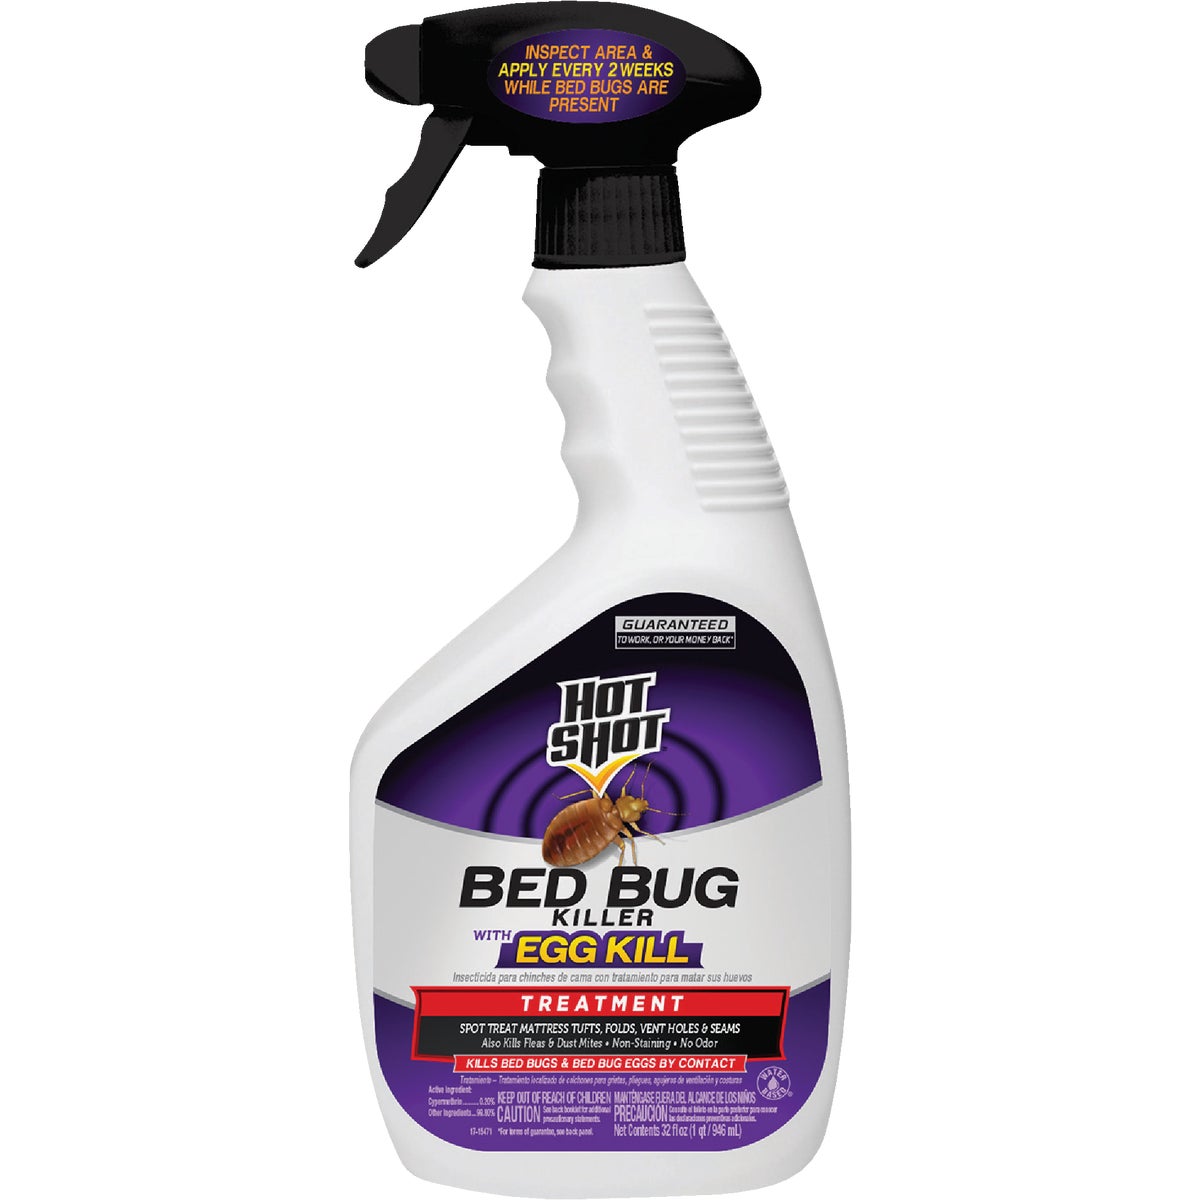 Item 702852, Hot Shot flea and bedbug killer kills on contact.